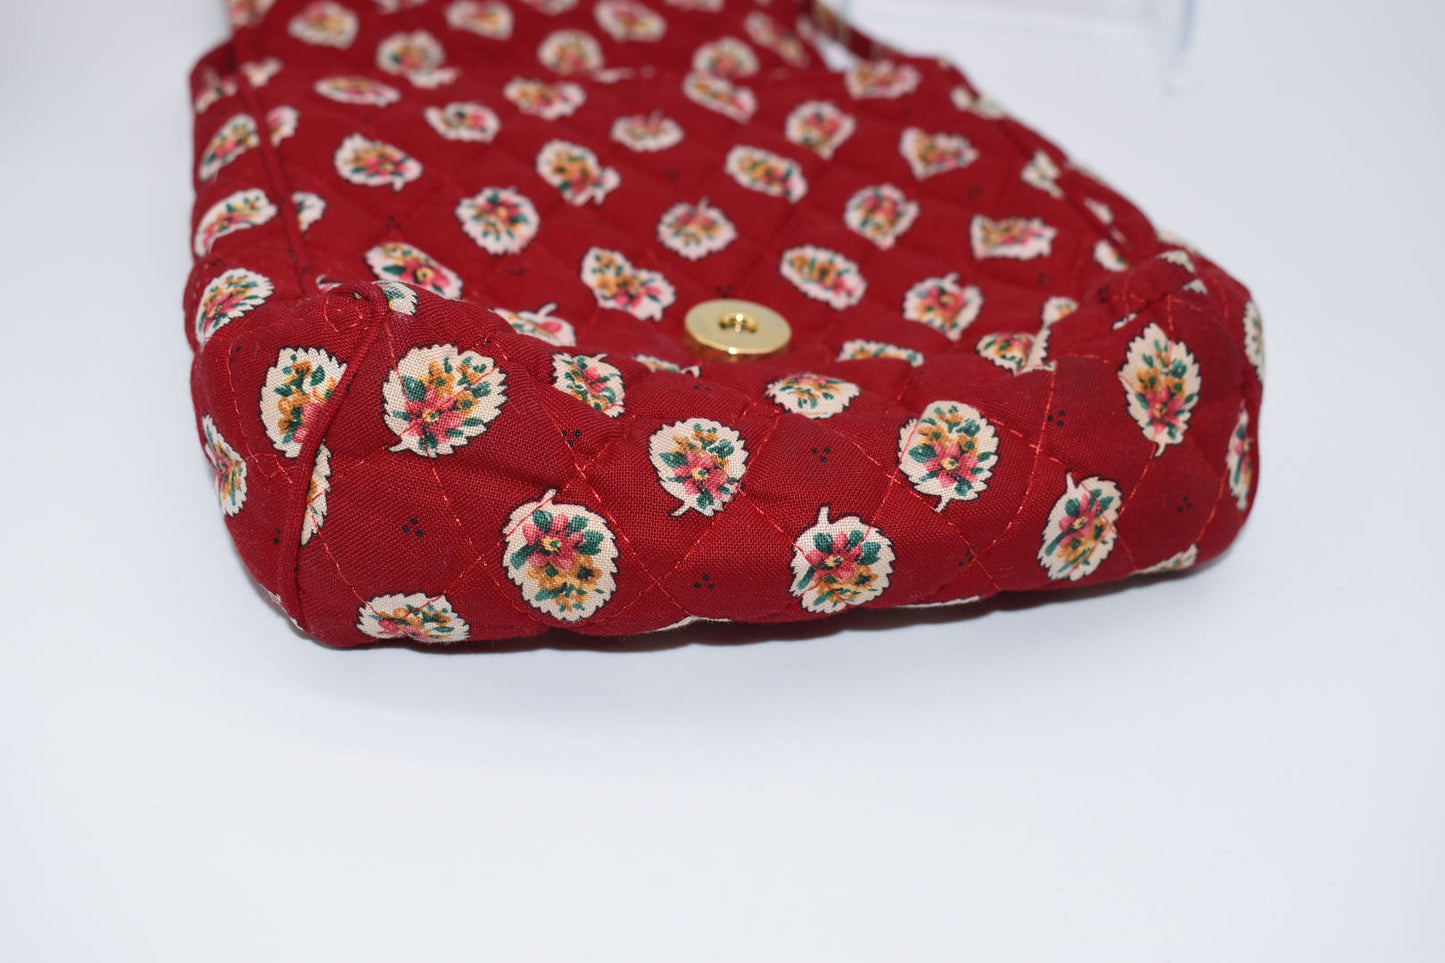 Vera Bradley Vintage Small Crossbody Bag in "Red Leaf" Pattern